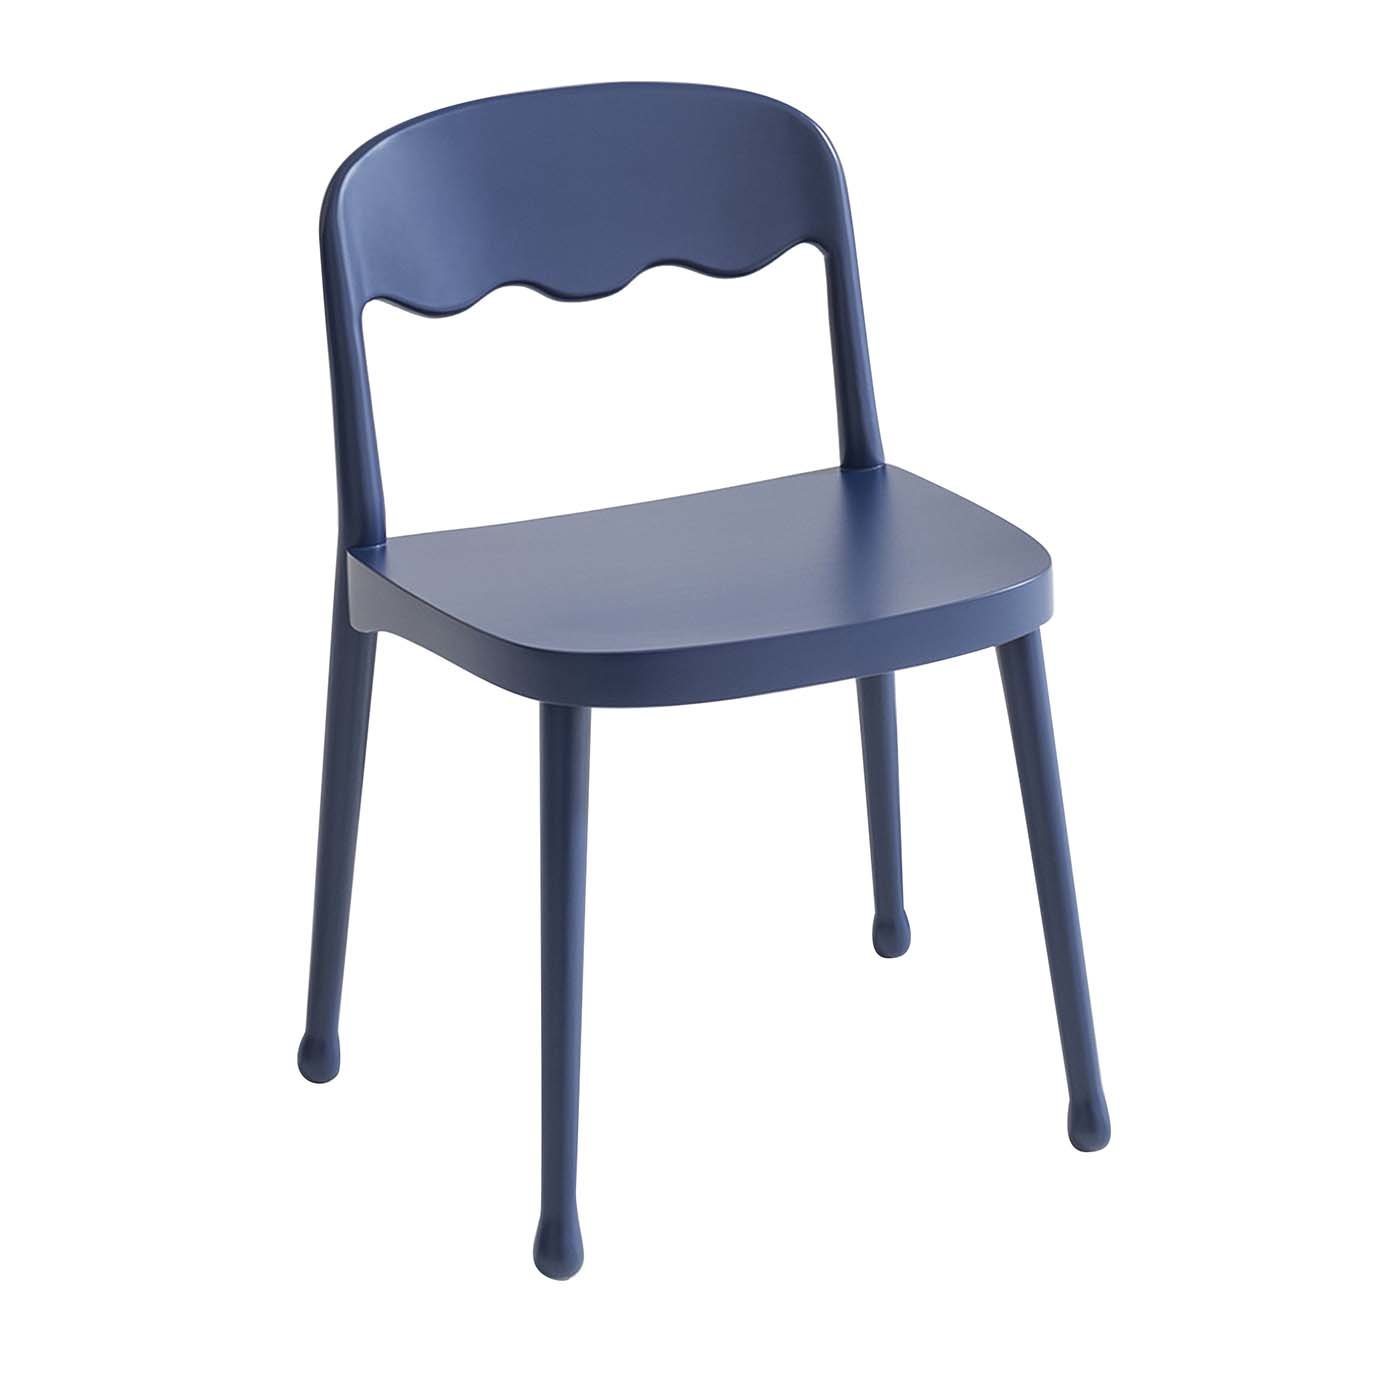 Frisée 250 Blauer stuhl by Cristina Celestino - Hauptansicht